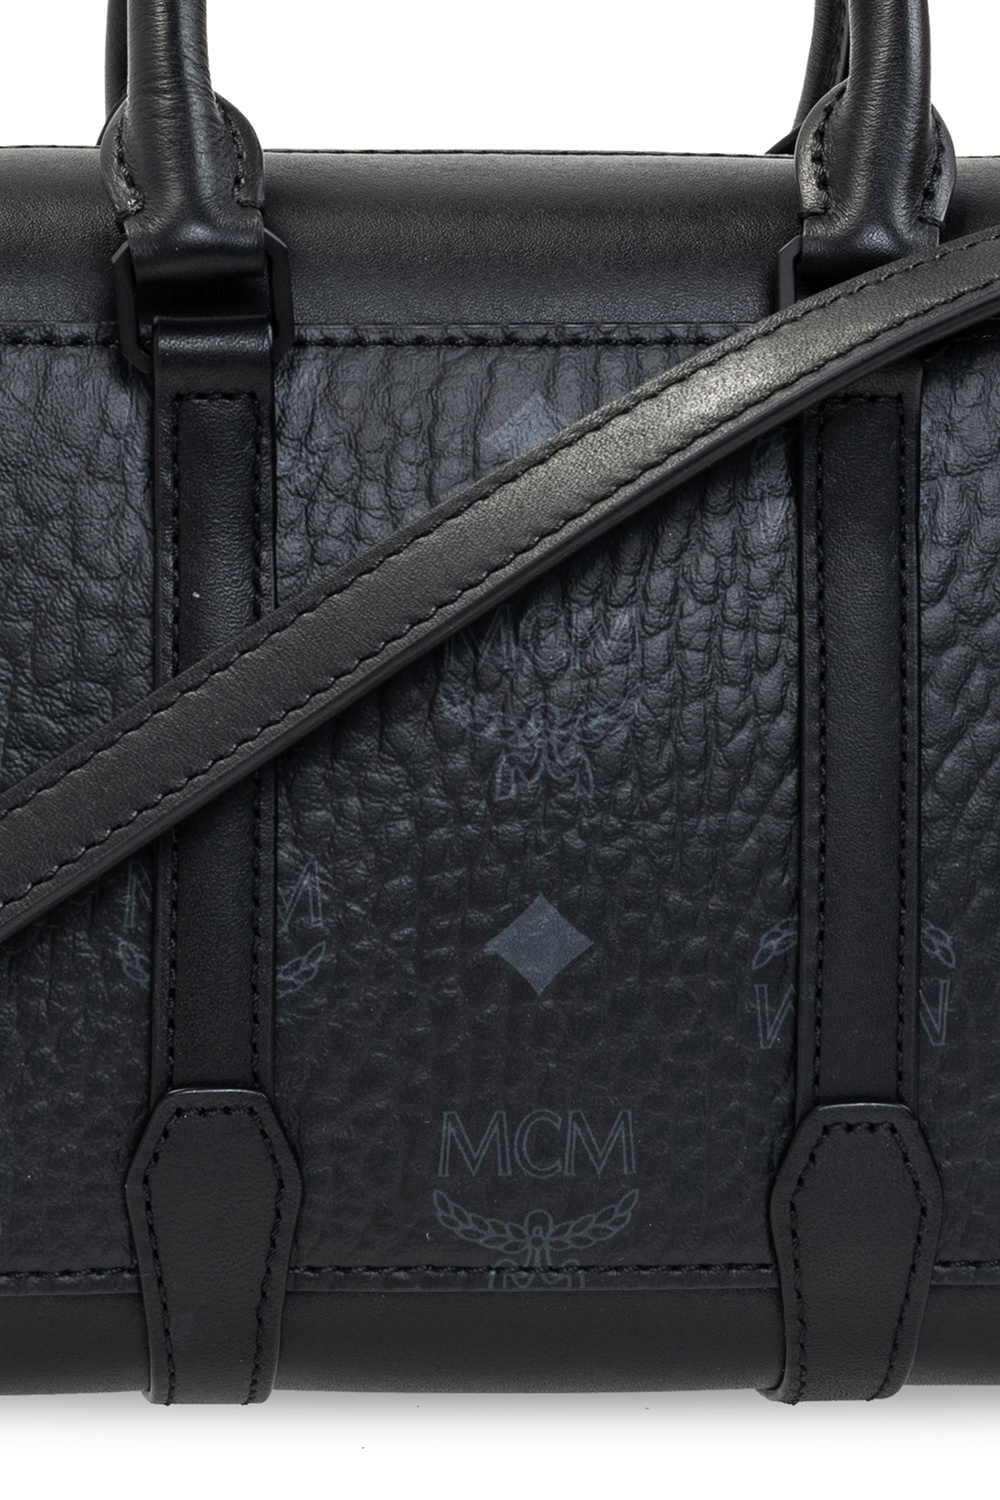 Mcm Soft Berlin Crossbody Bag In Monogram Leather In White